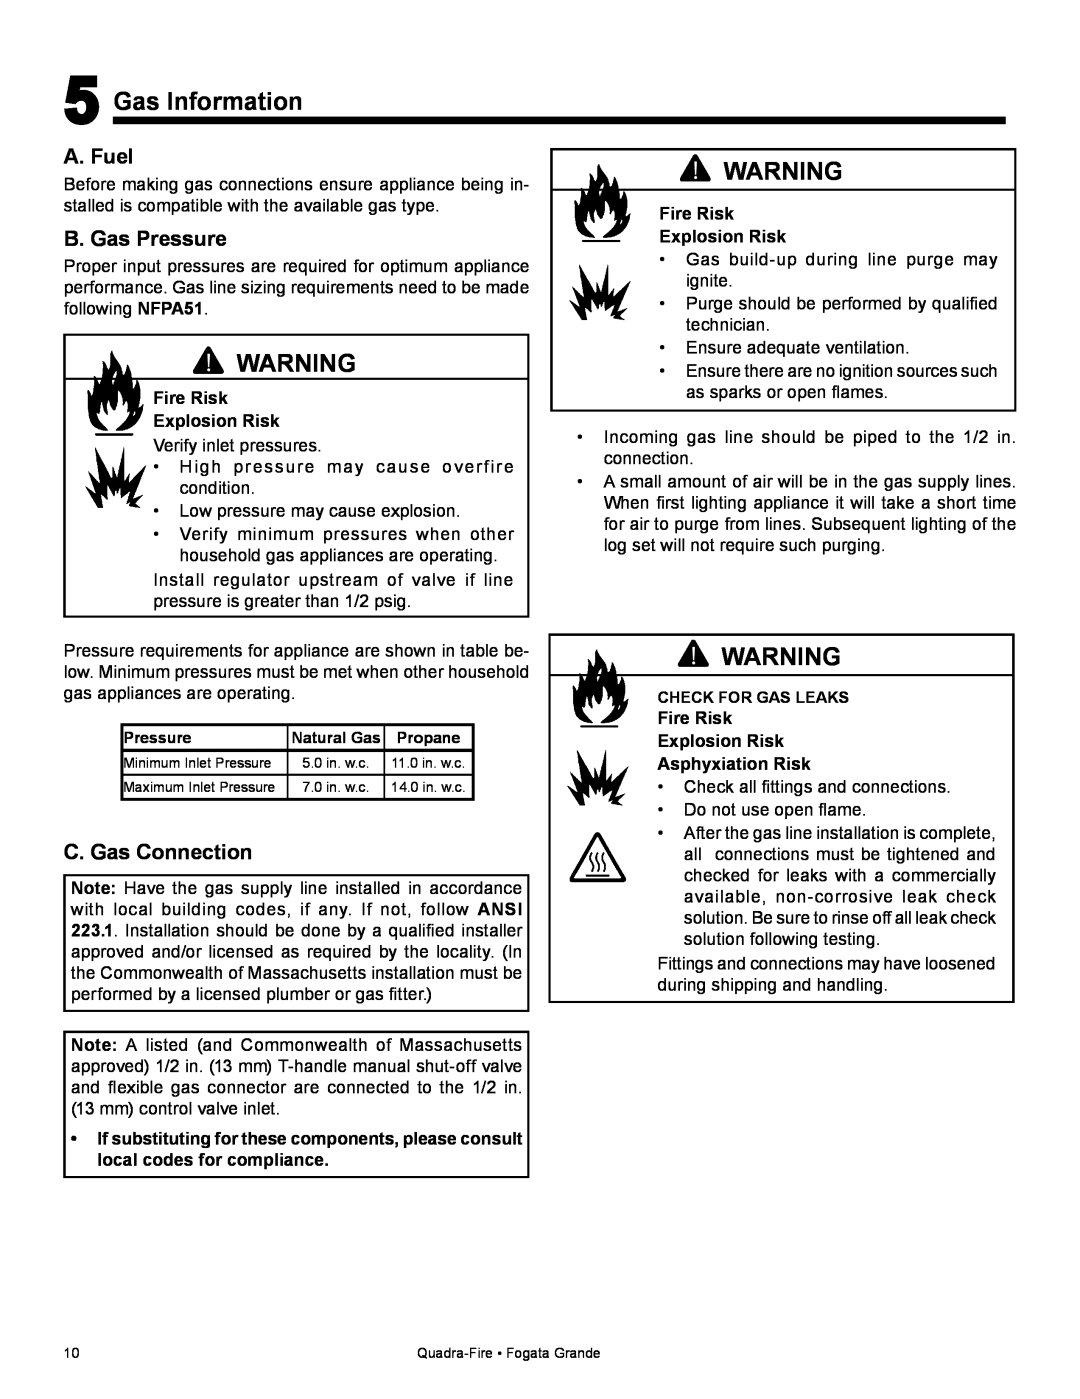 Quadra-Fire FG21SP-LP owner manual Gas Information, A. Fuel, B. Gas Pressure, C. Gas Connection, Fire Risk Explosion Risk 